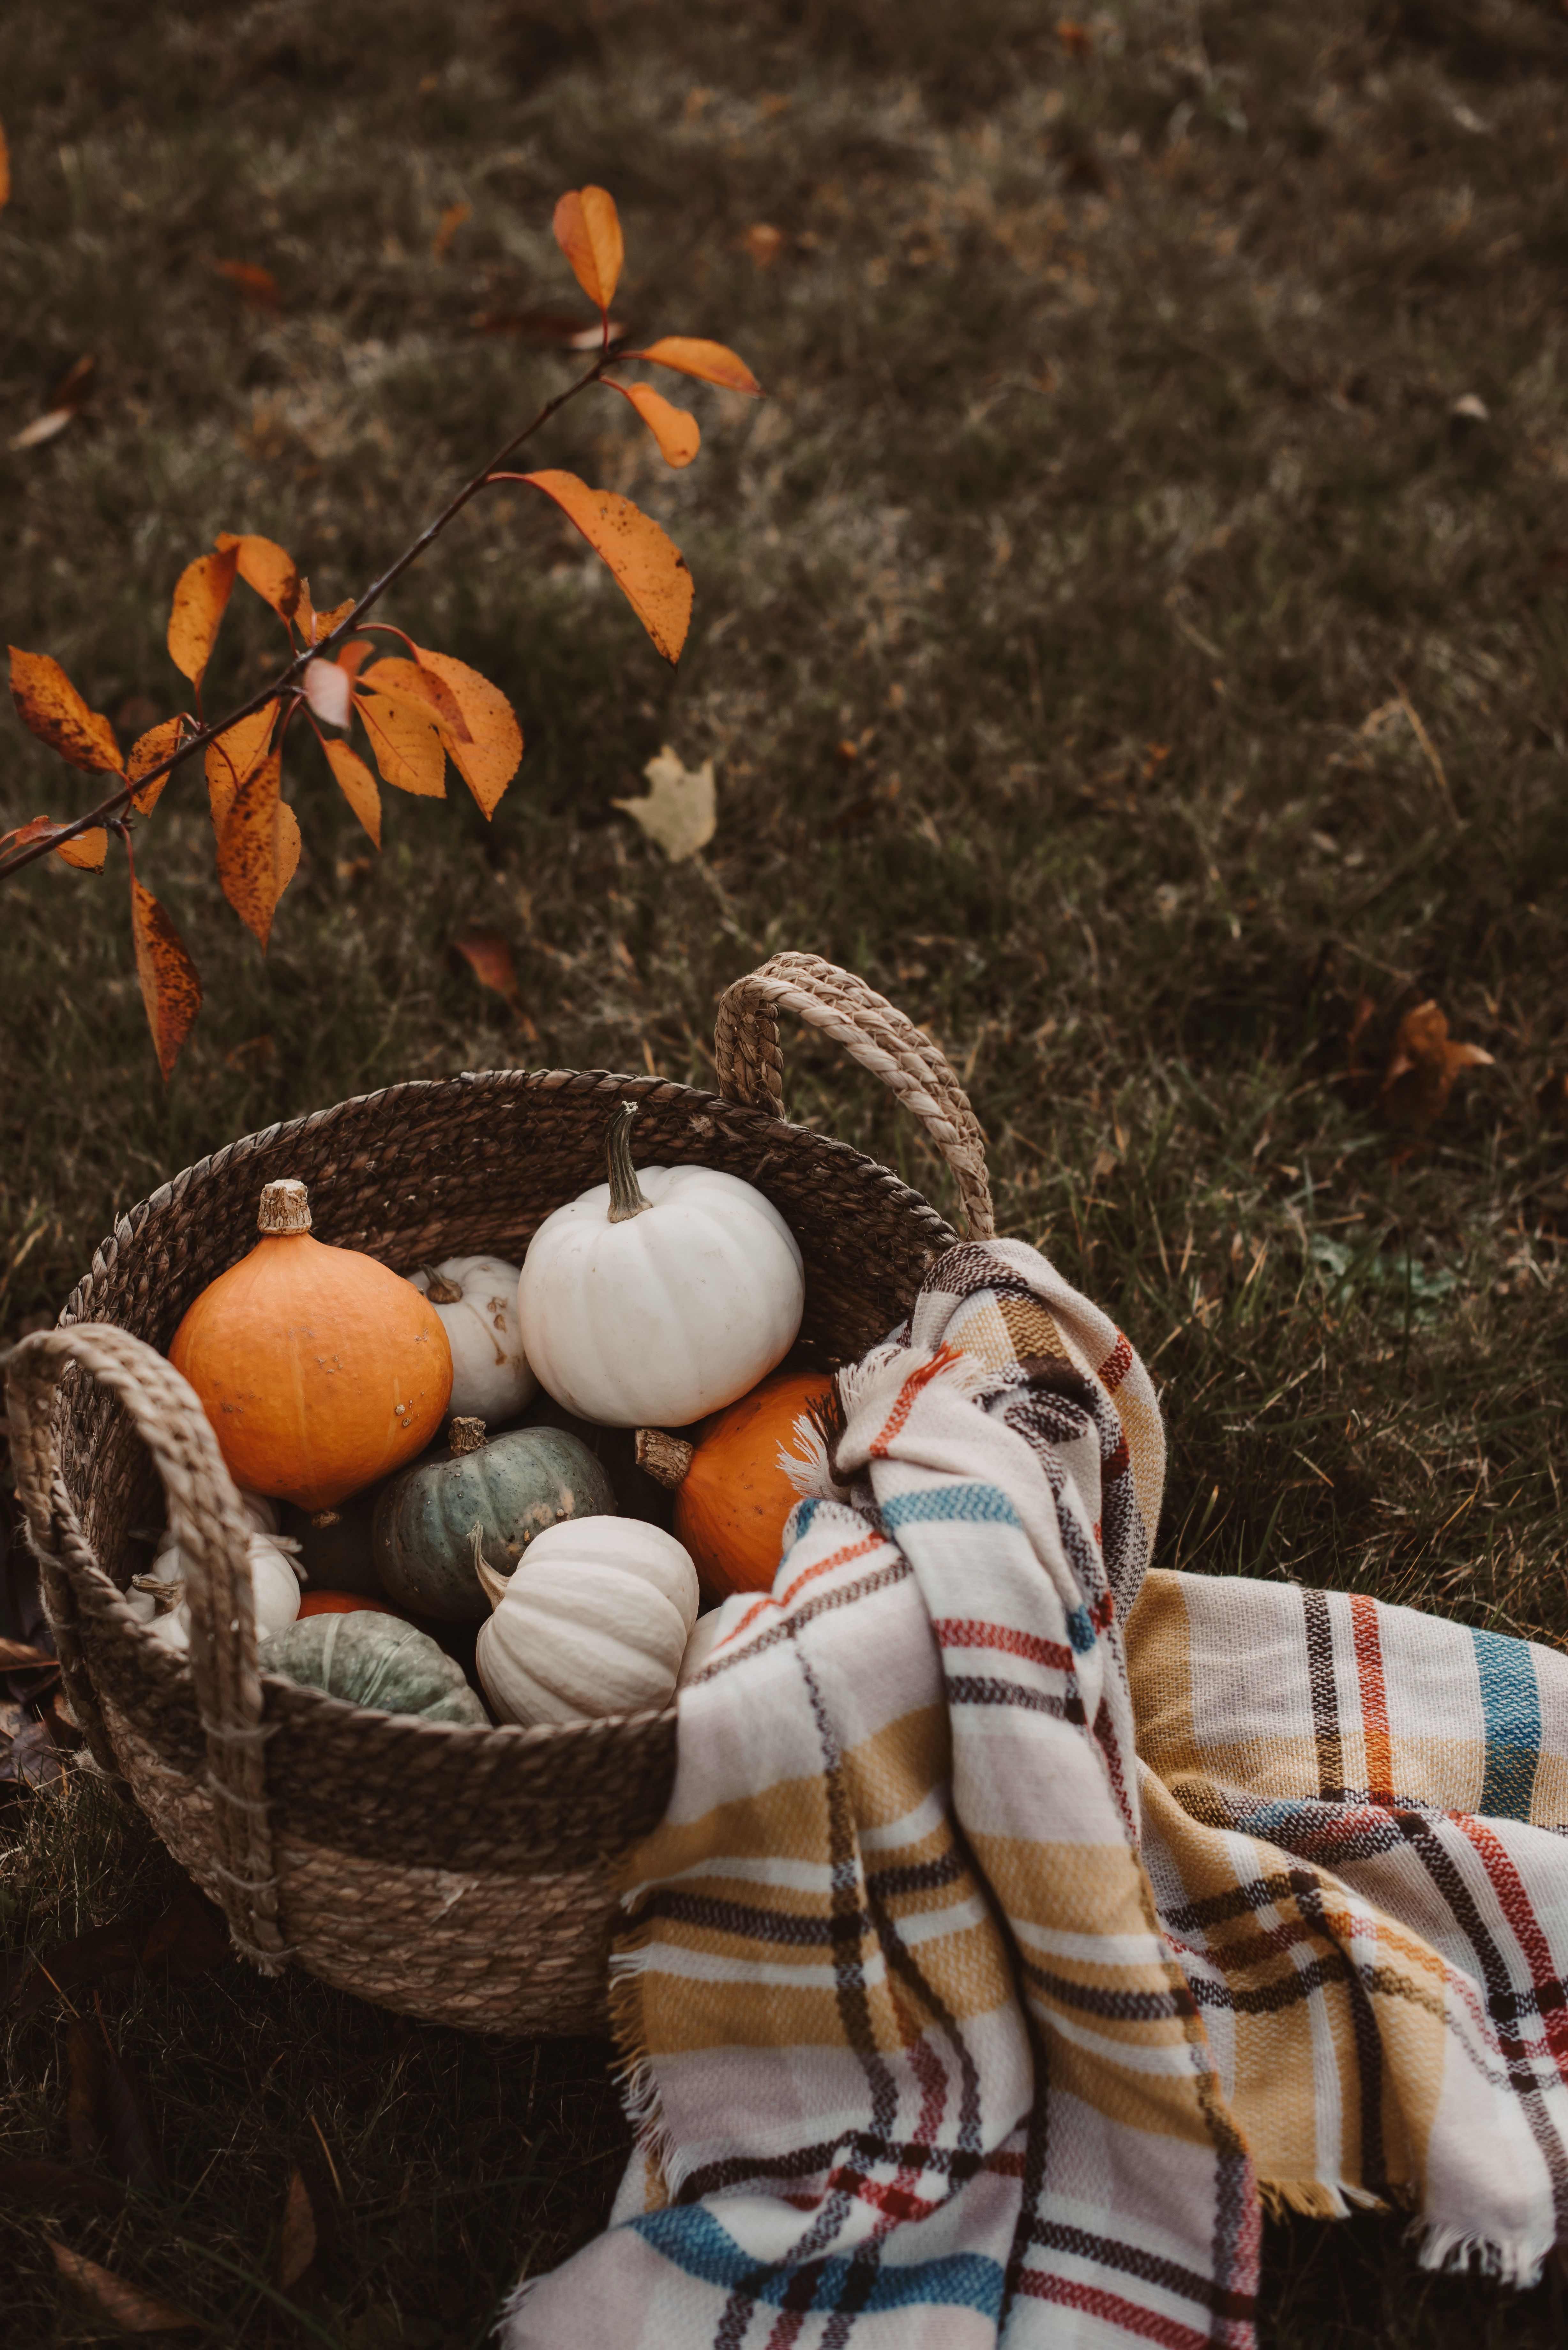 A basket of pumpkins and gourds on the ground - Pumpkin